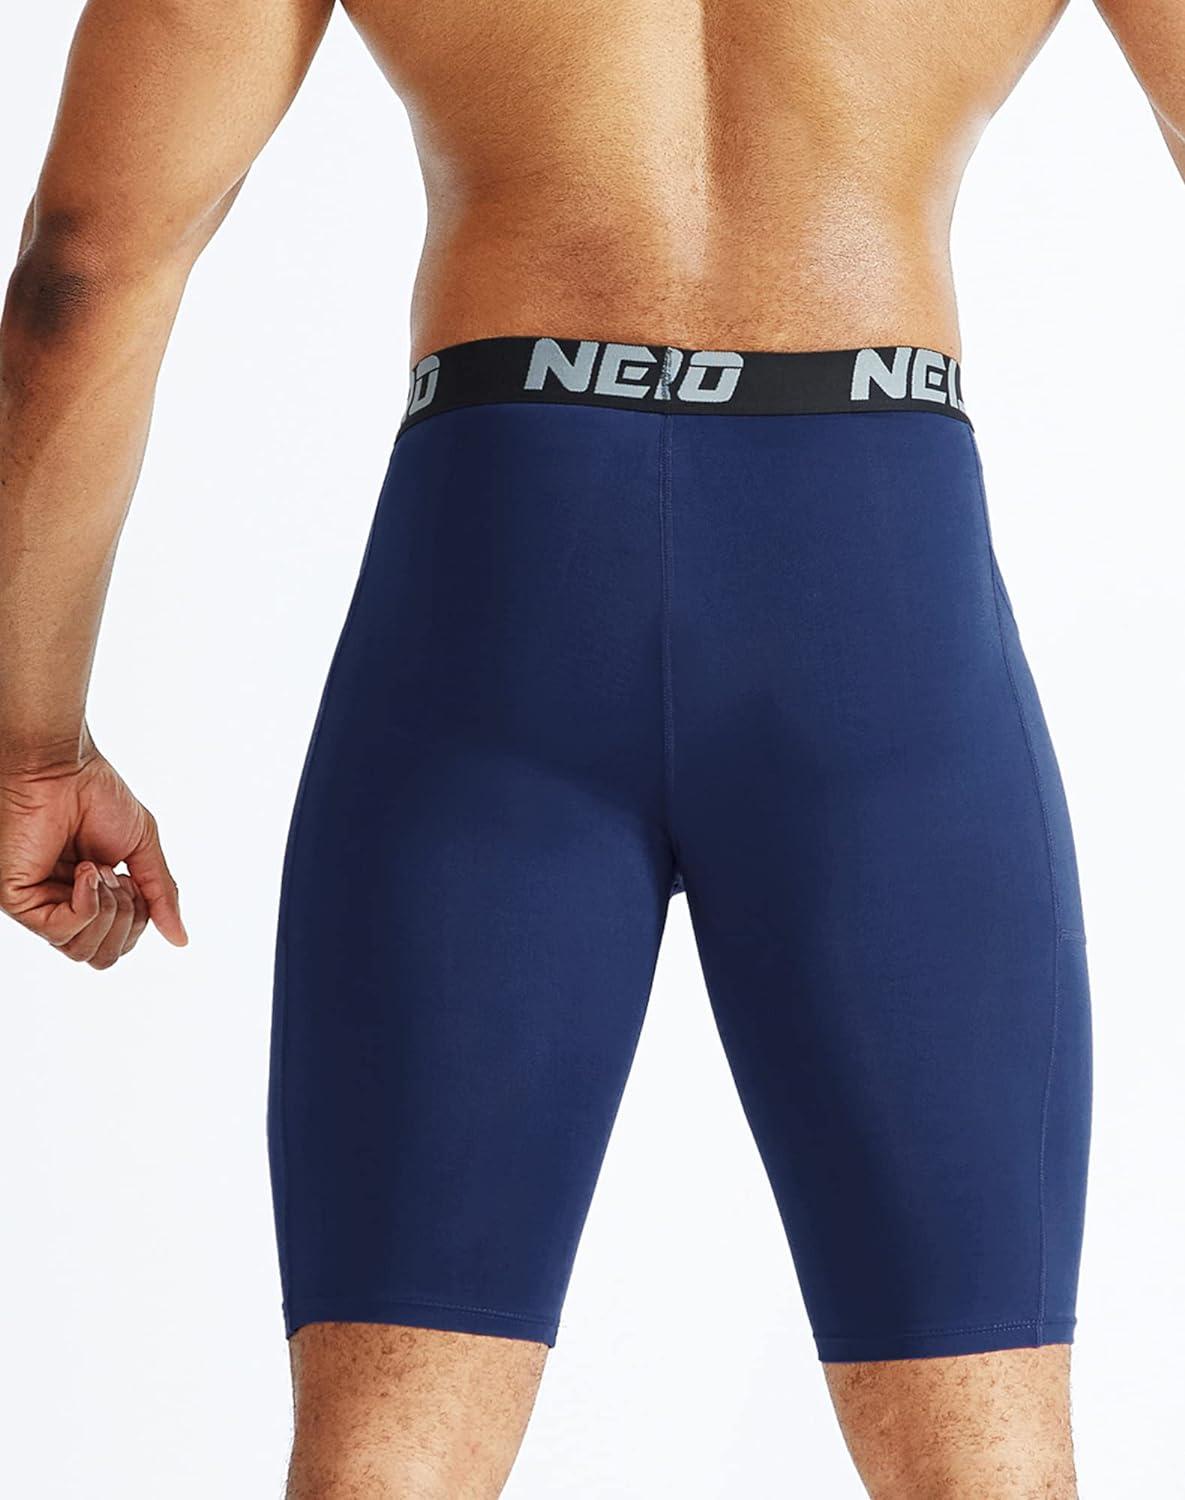 Neleus Men's Compression Short with Pocket Dry Fit Yoga Shorts